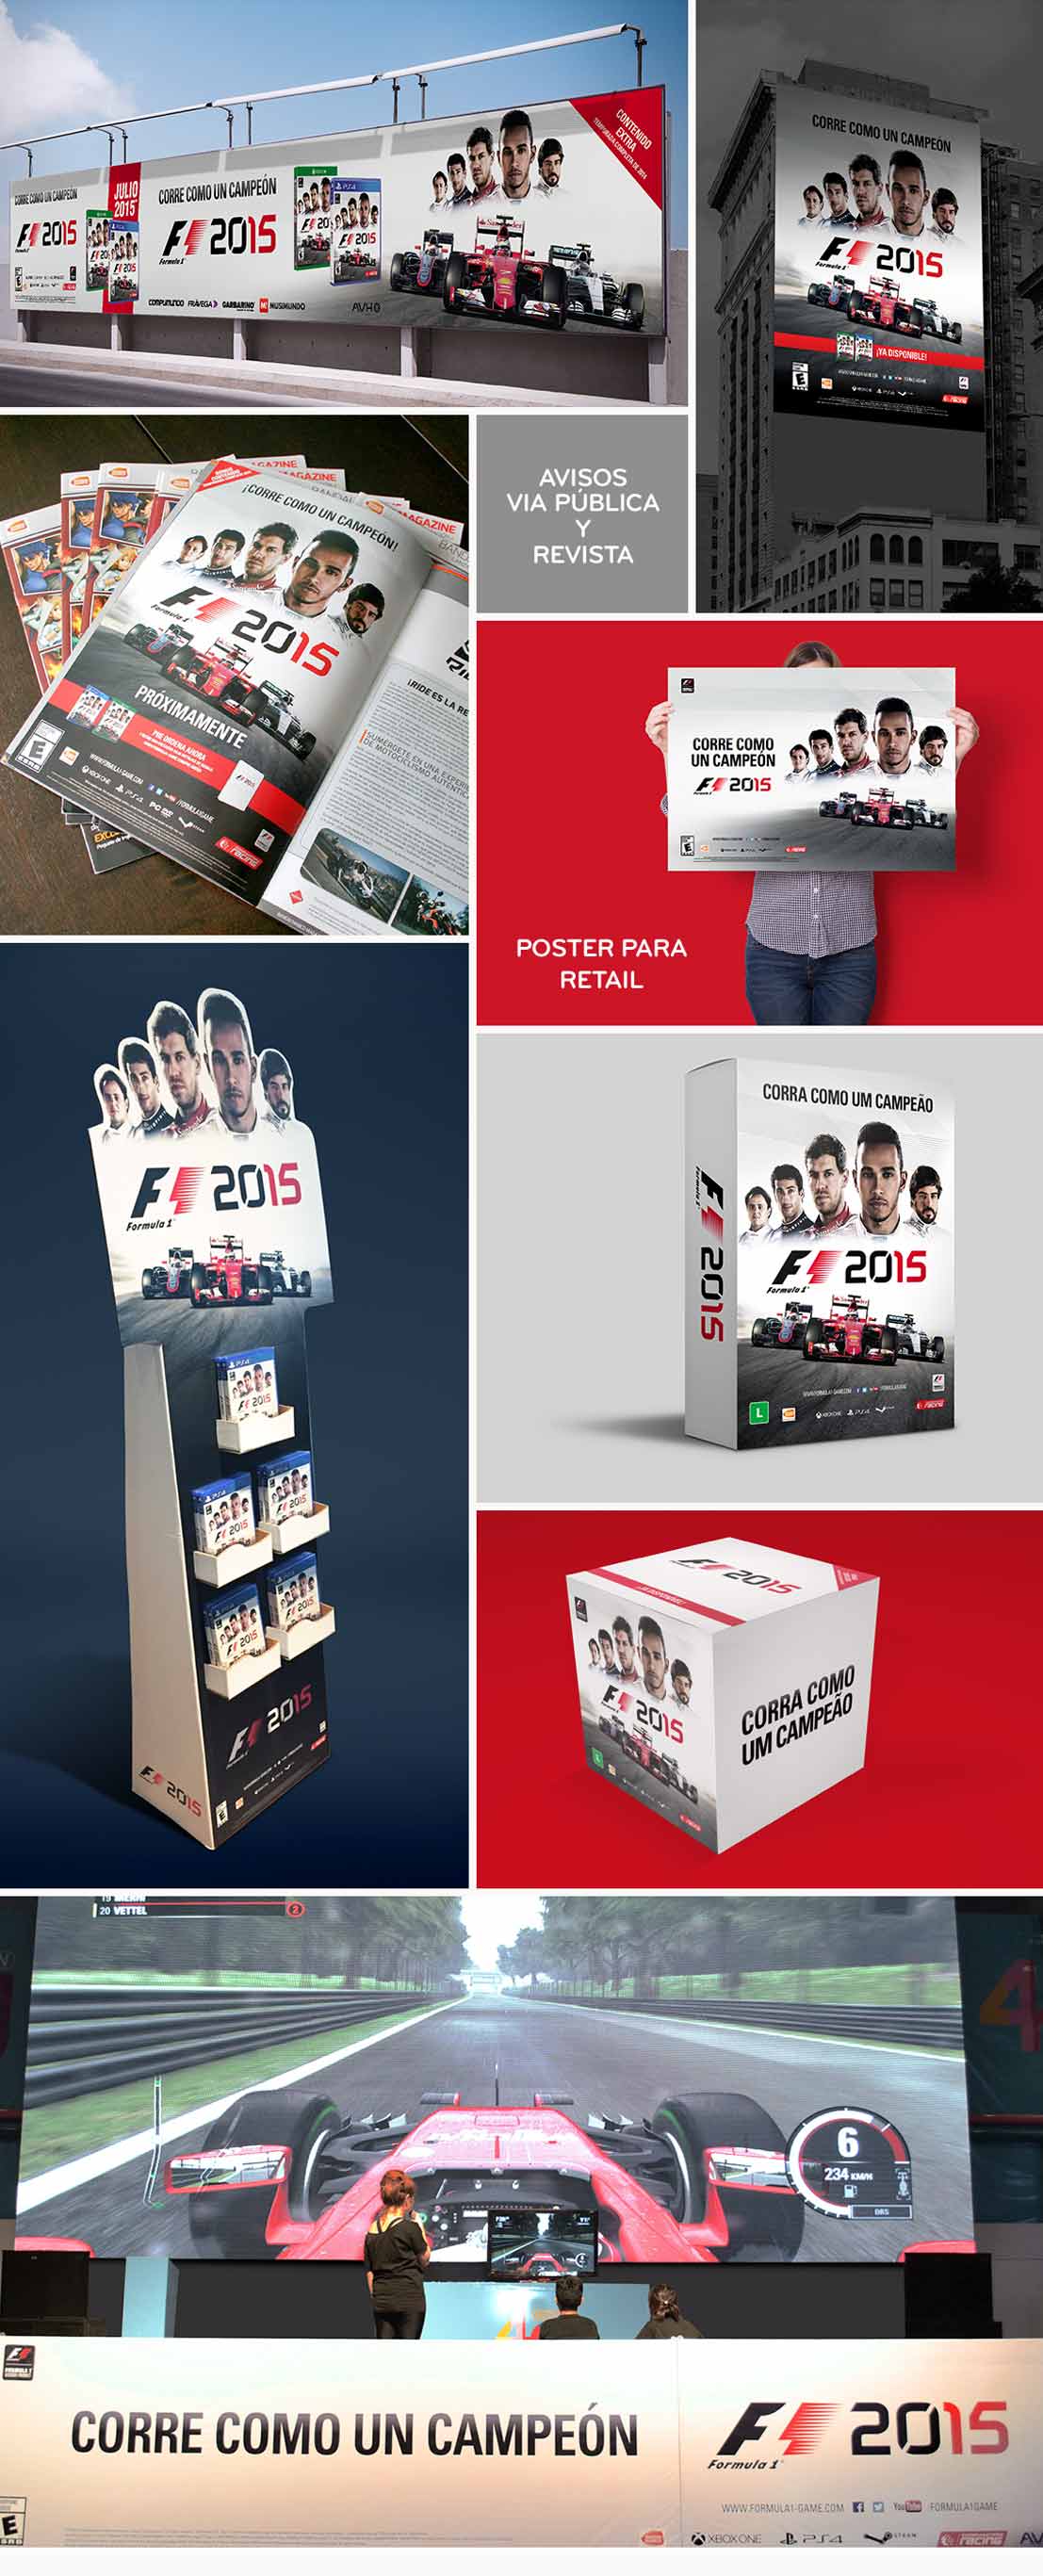 BNE F1, campaign for Formula 1